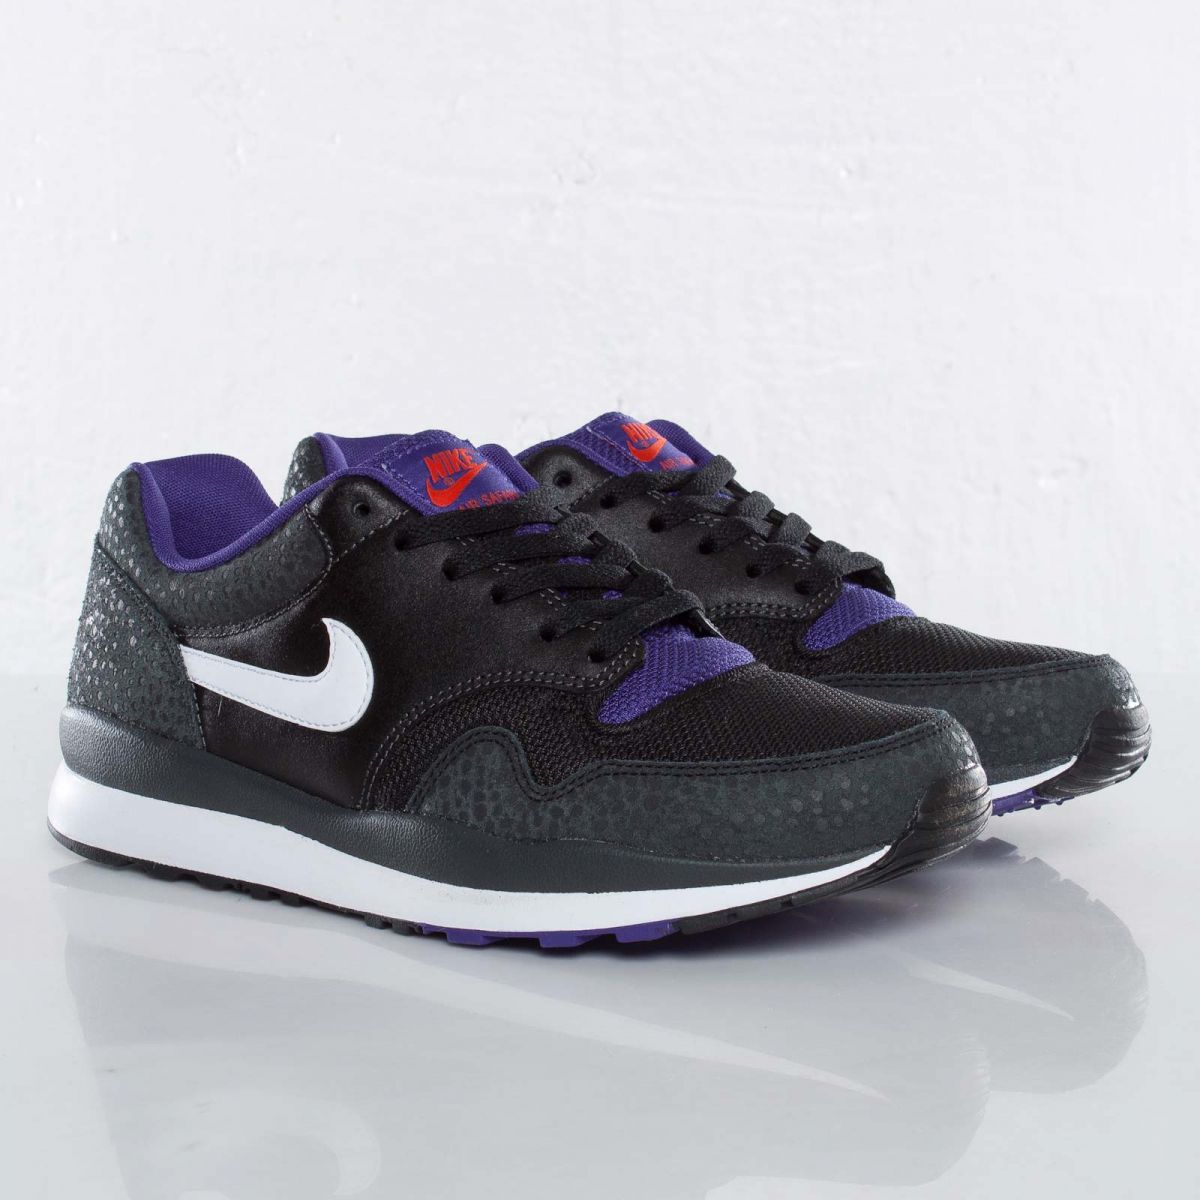 Nike Air Safari - Anthracite/Court Purple | Sole Collector